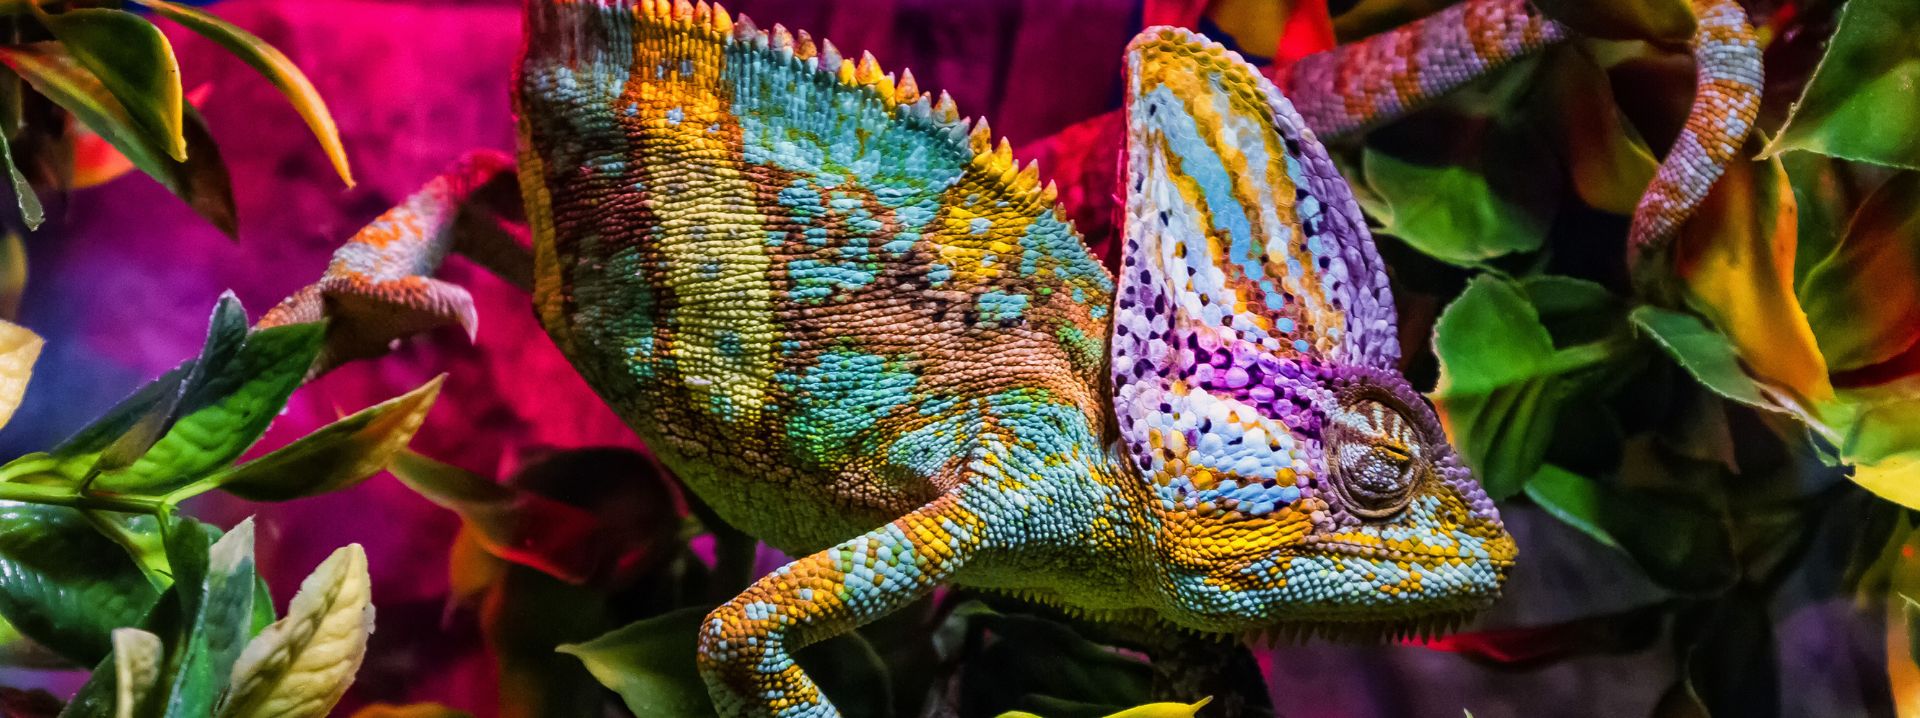 Chameleon in bunten Farben